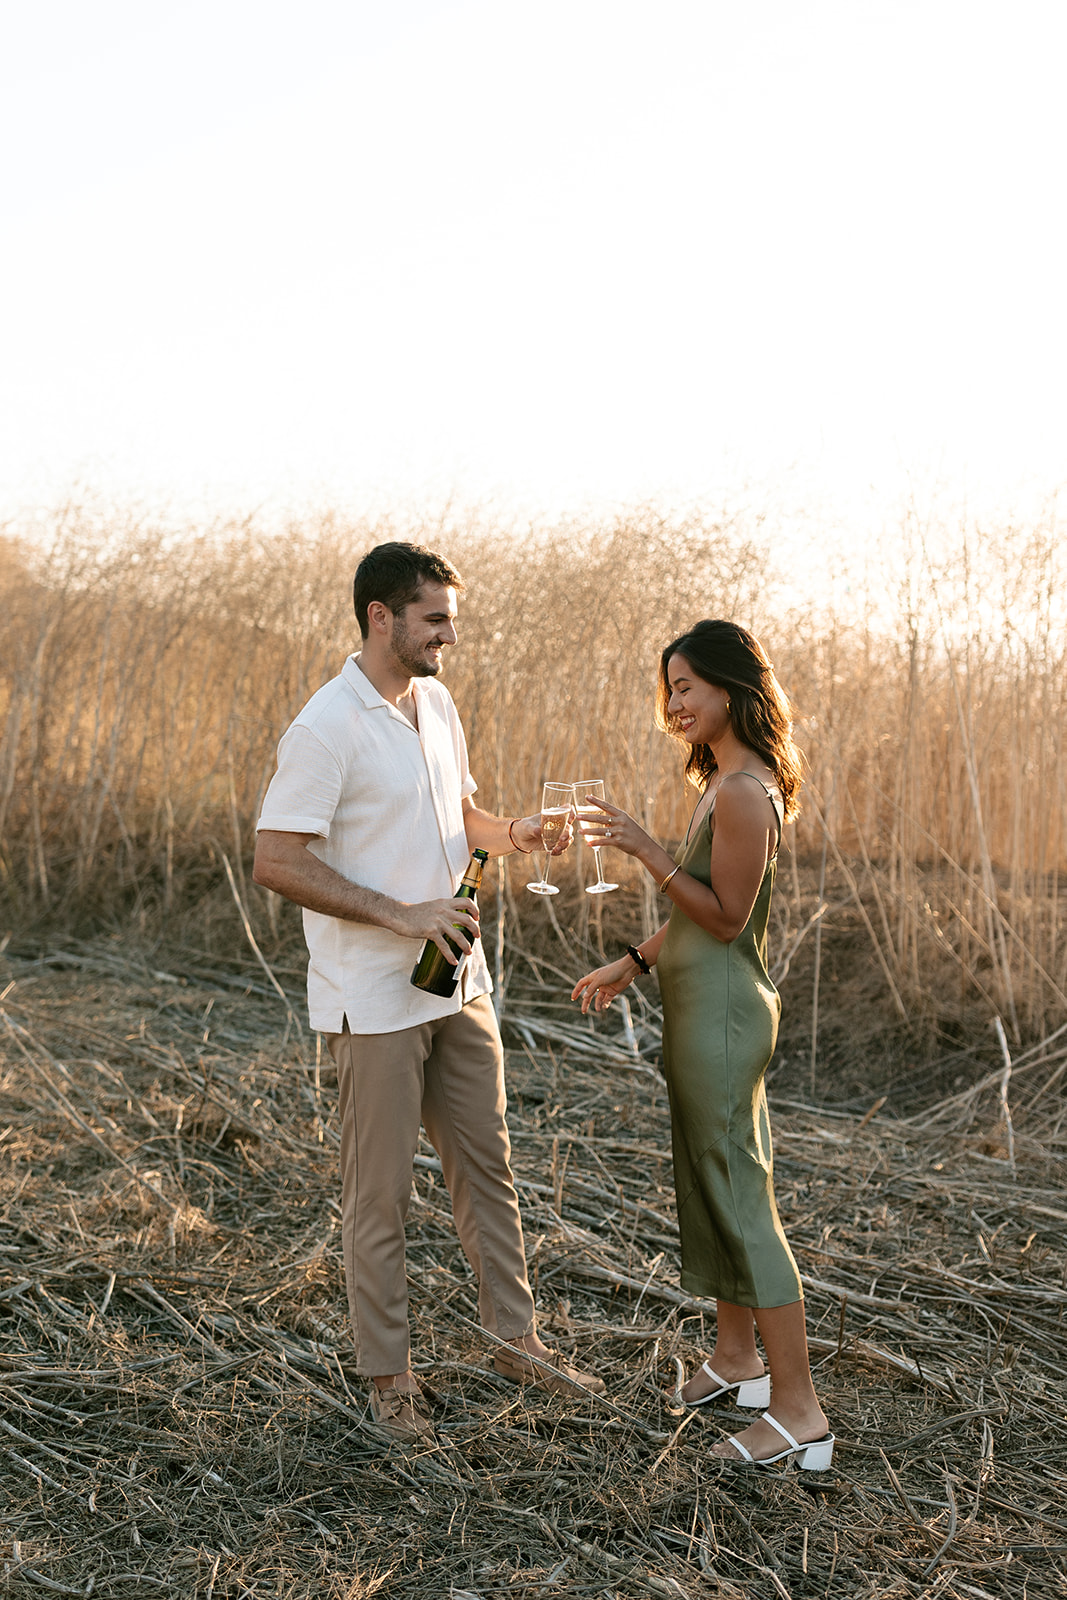 cliffside proposal engagement session palos verdes california socal couples poses ideas orange county photographer